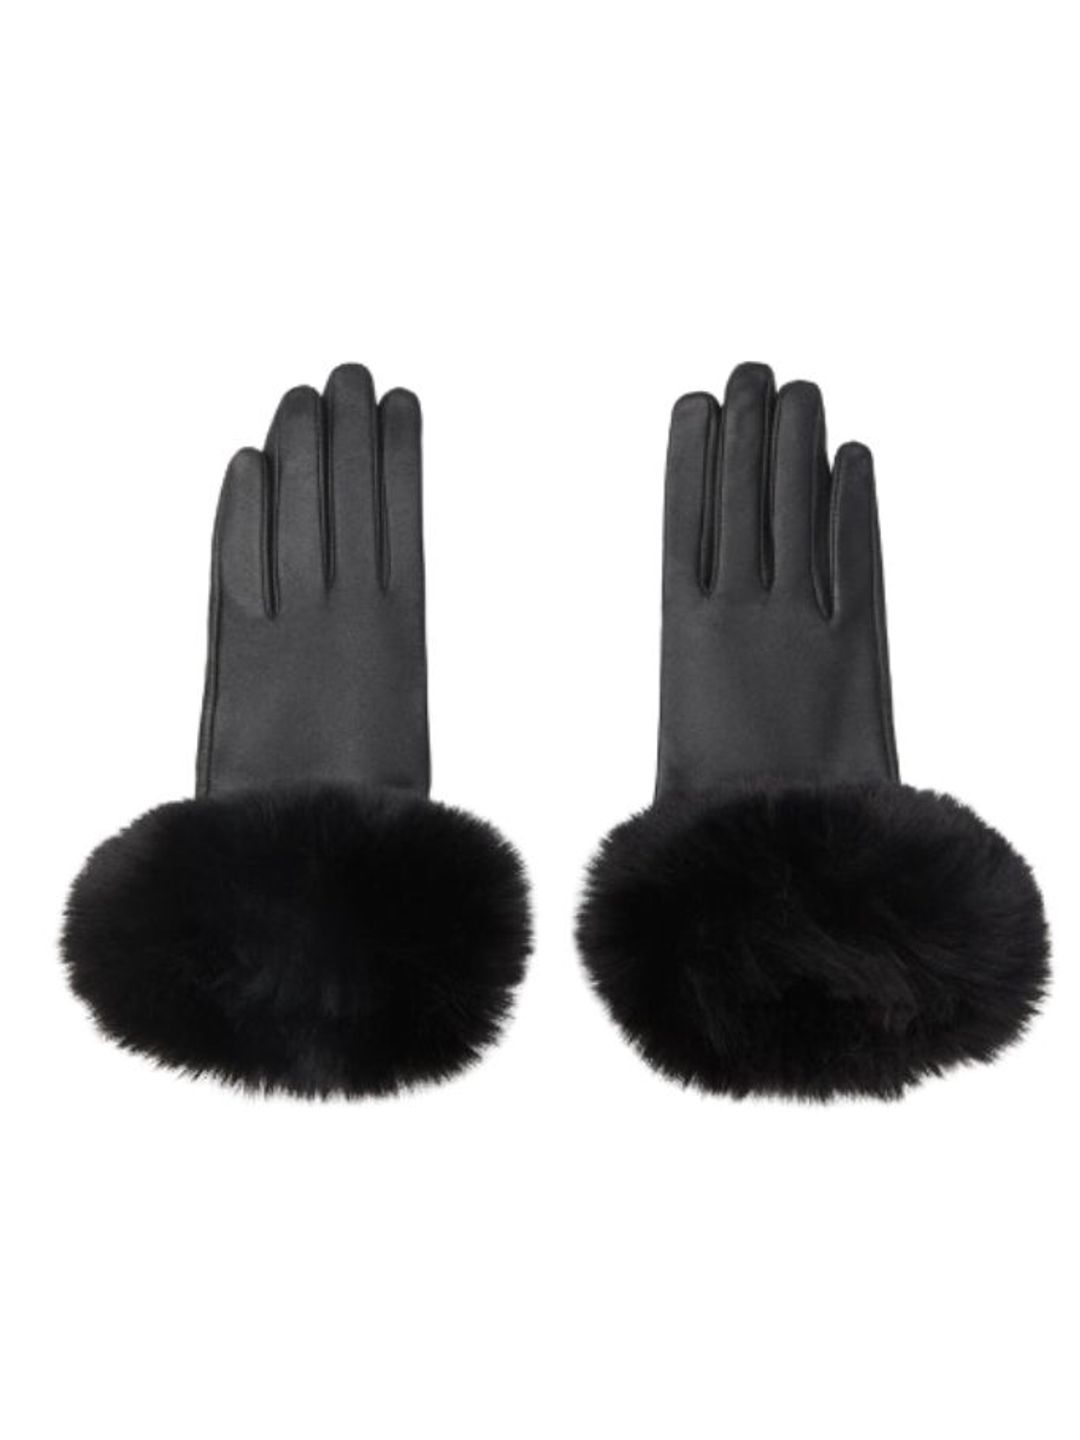 Zara black gloves with fluffy trim 